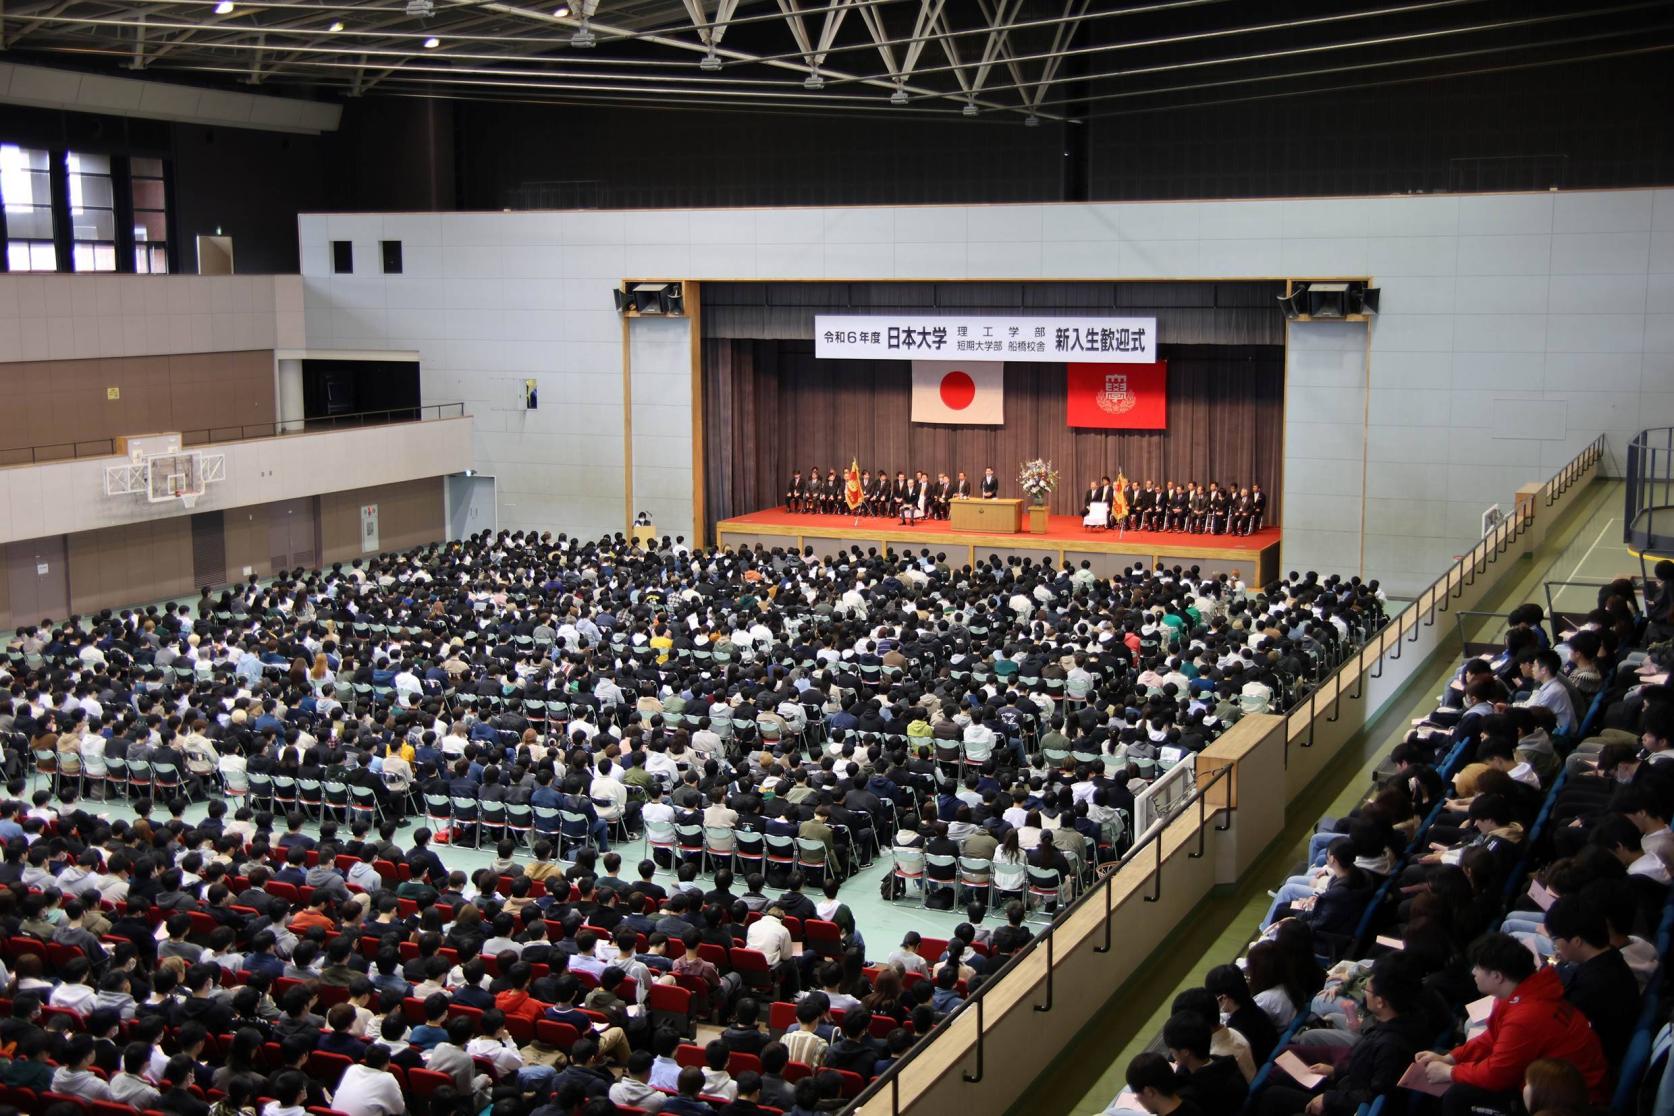 令和６年度 日本大学理工学部 短期大学部（船橋校舎）新入生歓迎式、大学院理工学研究科新入生歓迎式が執り行われました。